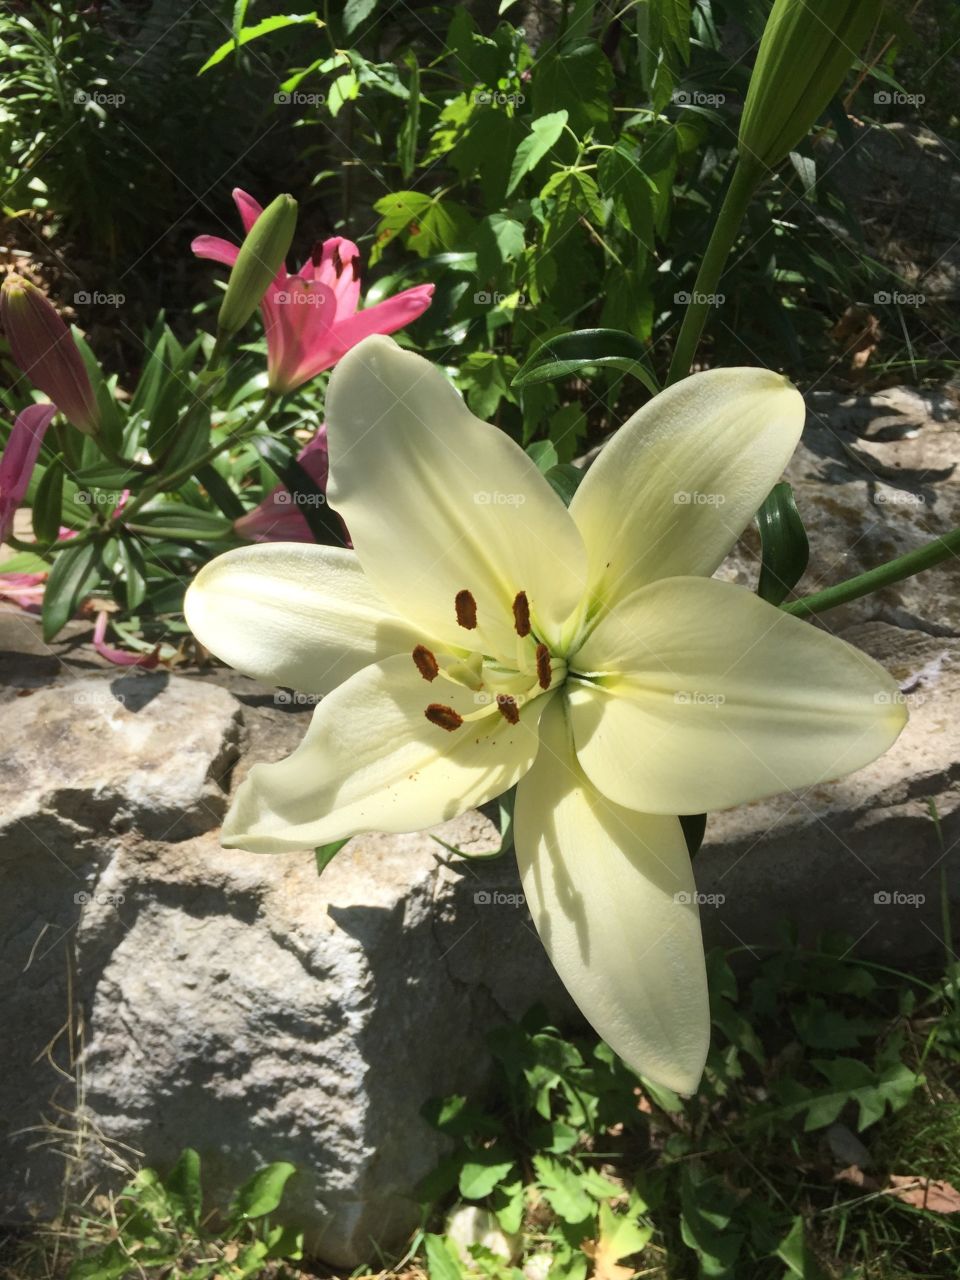 Cream Lily